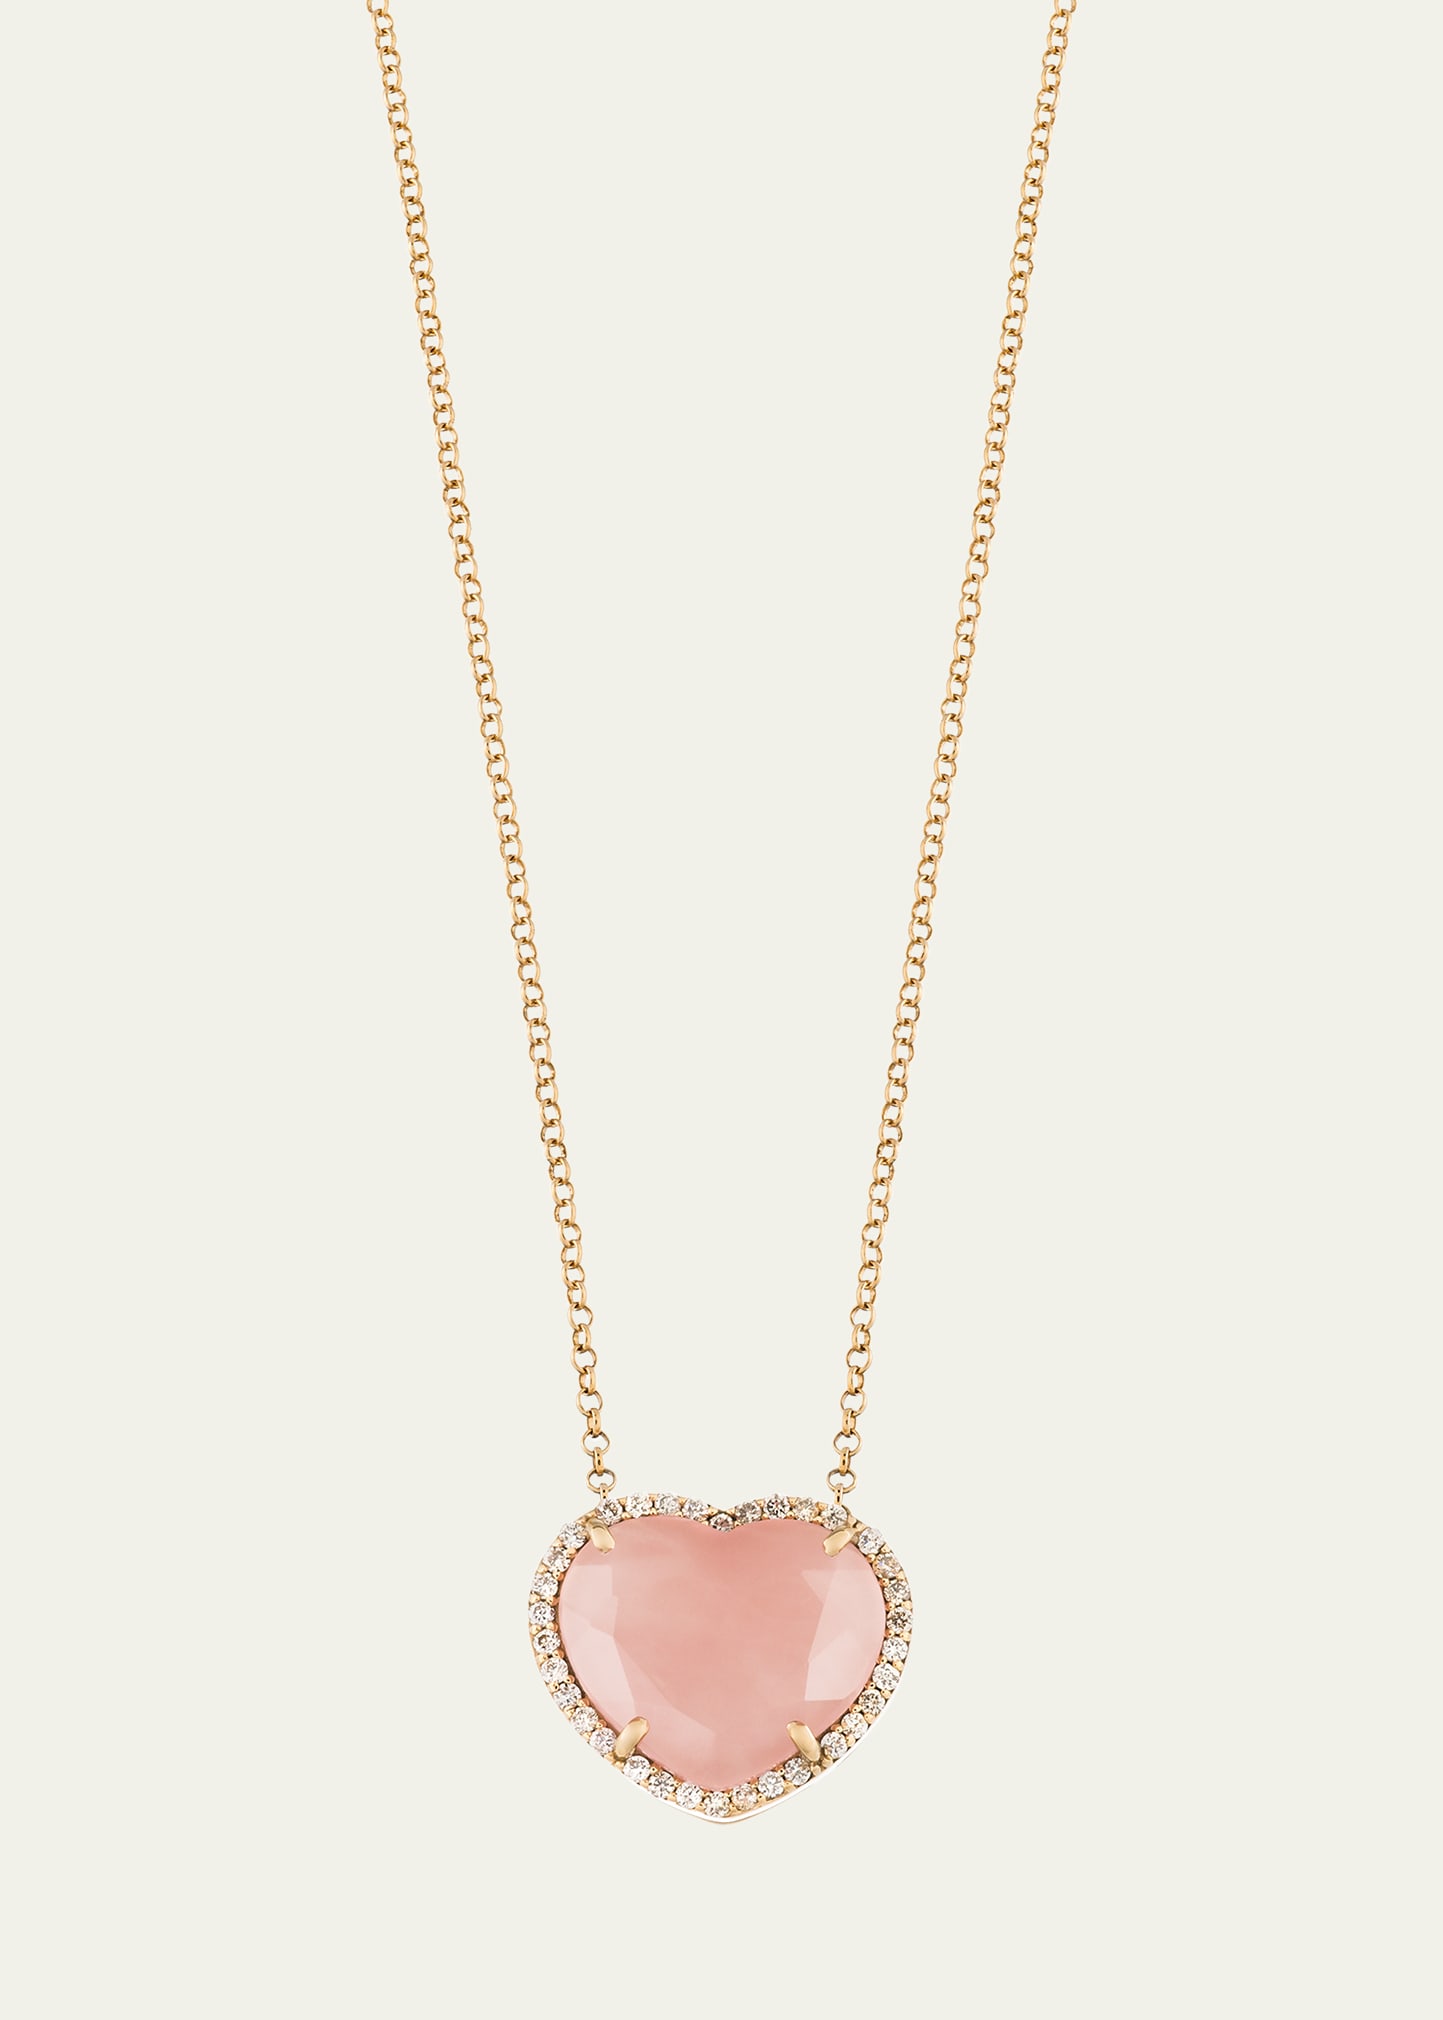 Daniella Kronfle 18k Rose Gold Medium Heart Necklace With Rose Quartz And Diamonds